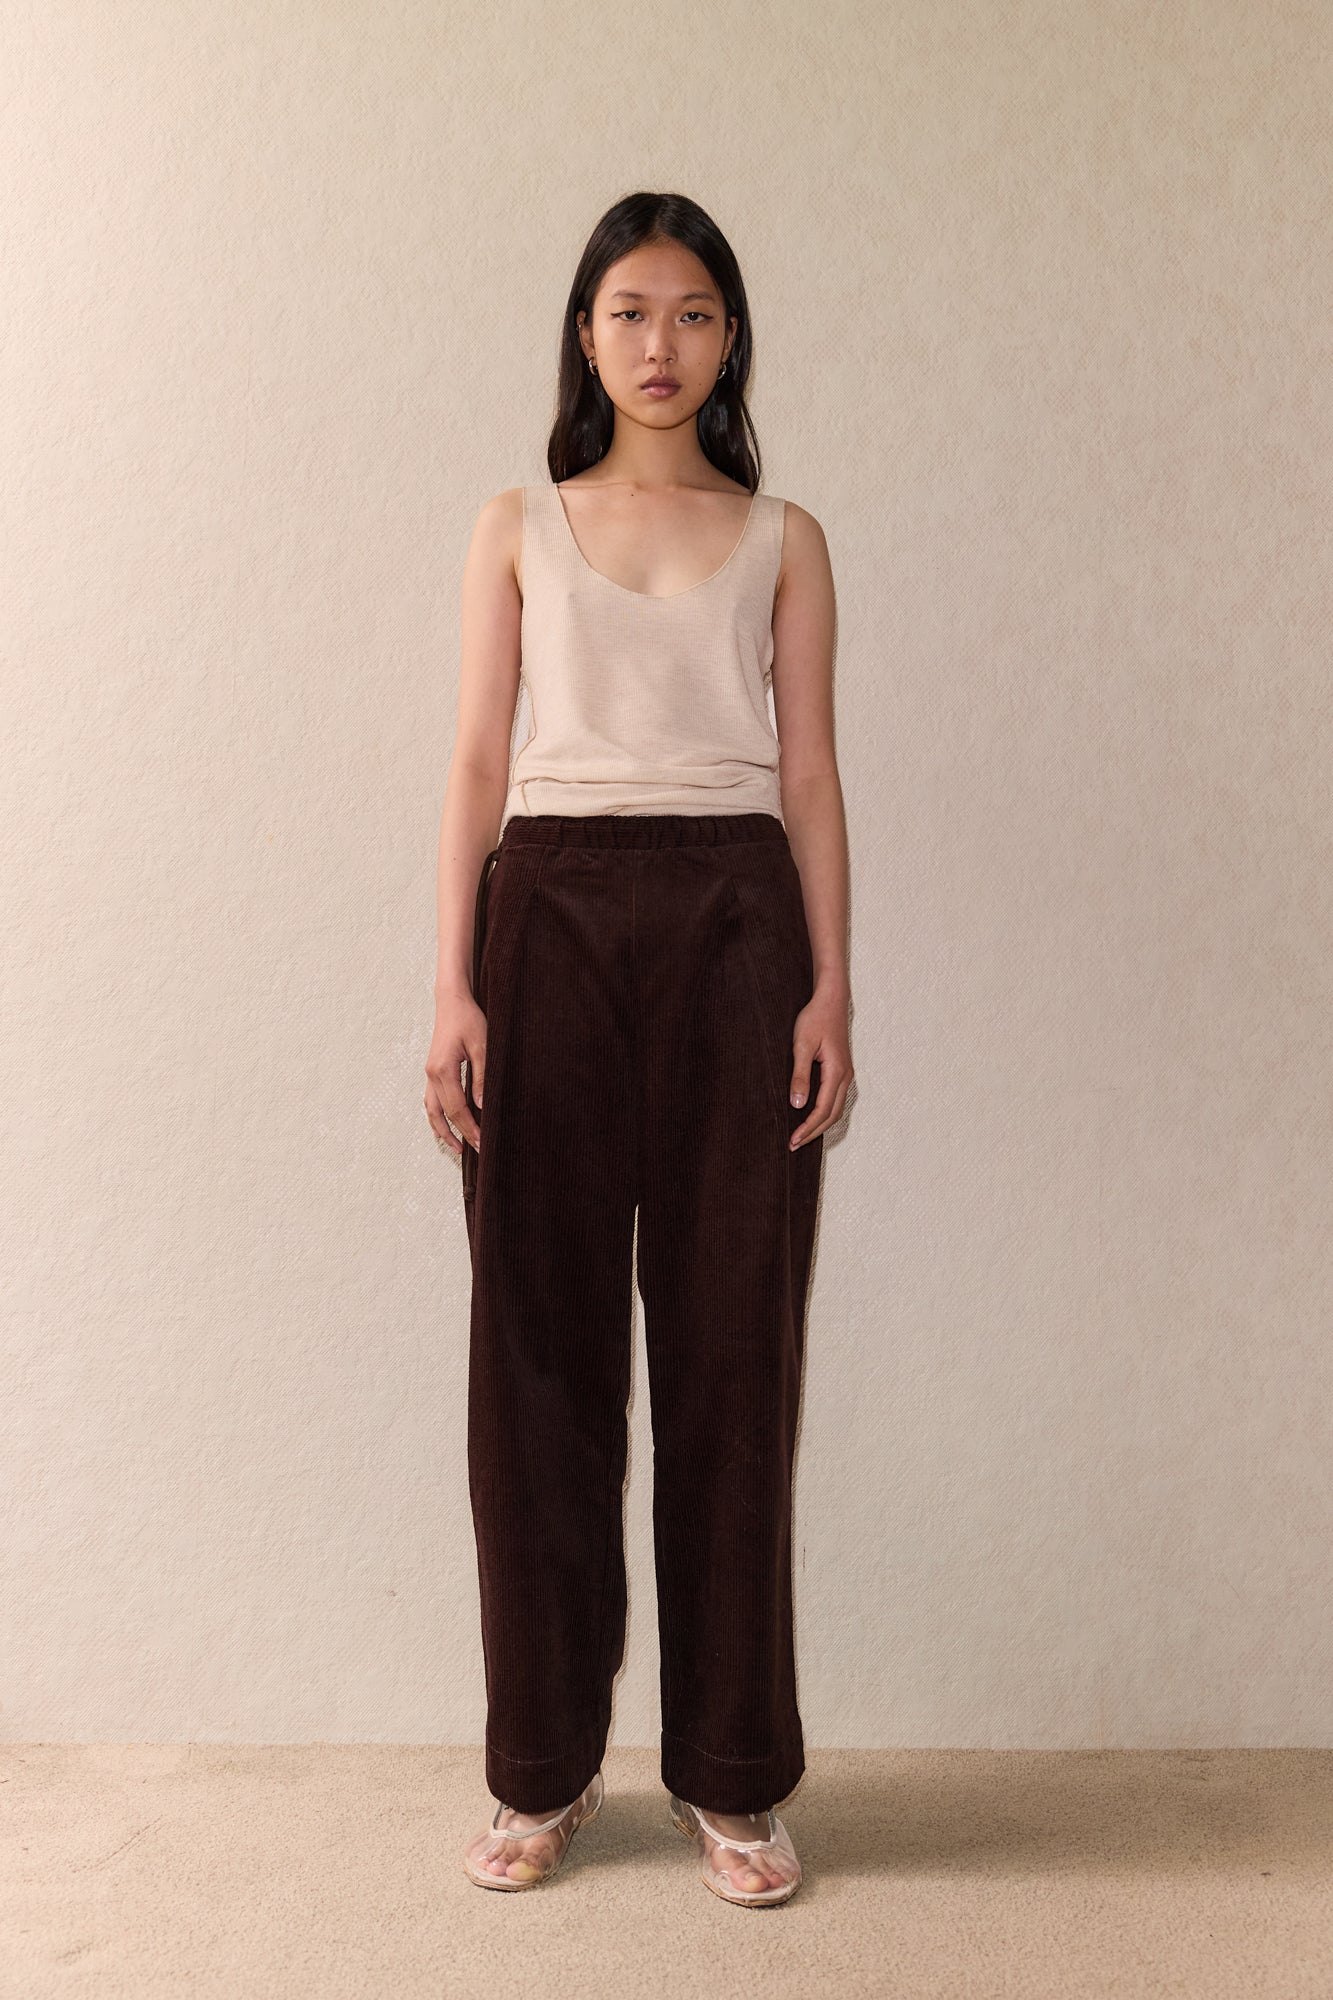 Female model wearing The Straight Cord Pant - Cedar by Deiji Studios against plain background